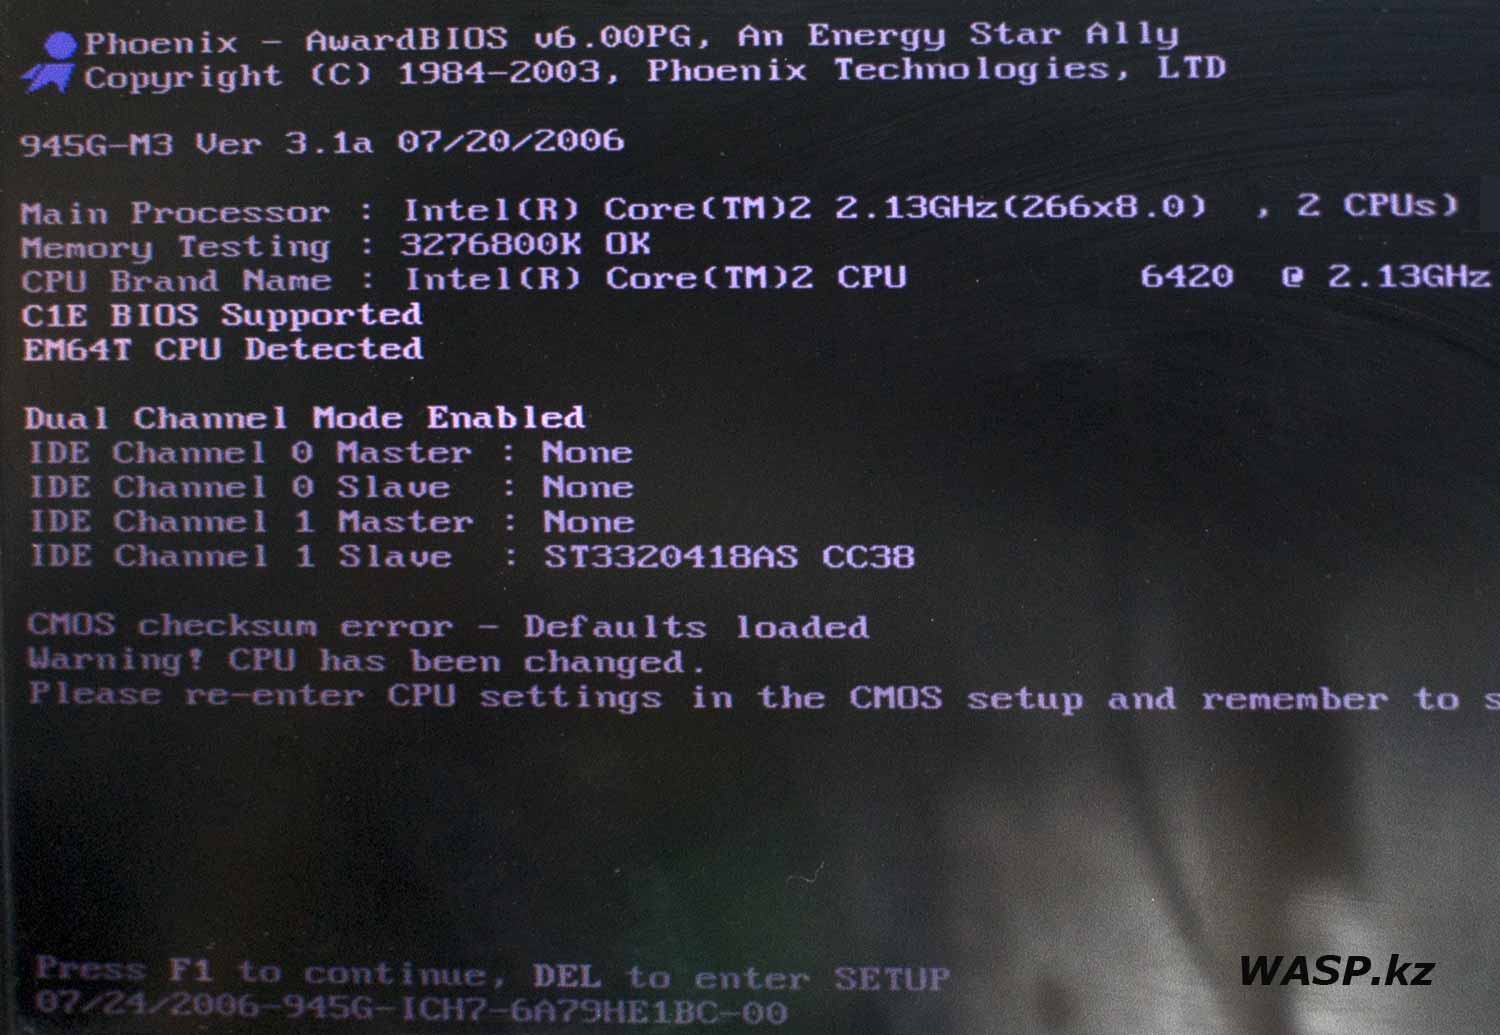 Прошивка BIOS матплаты 945G-M3 Ver 3.1a 07/20/2006